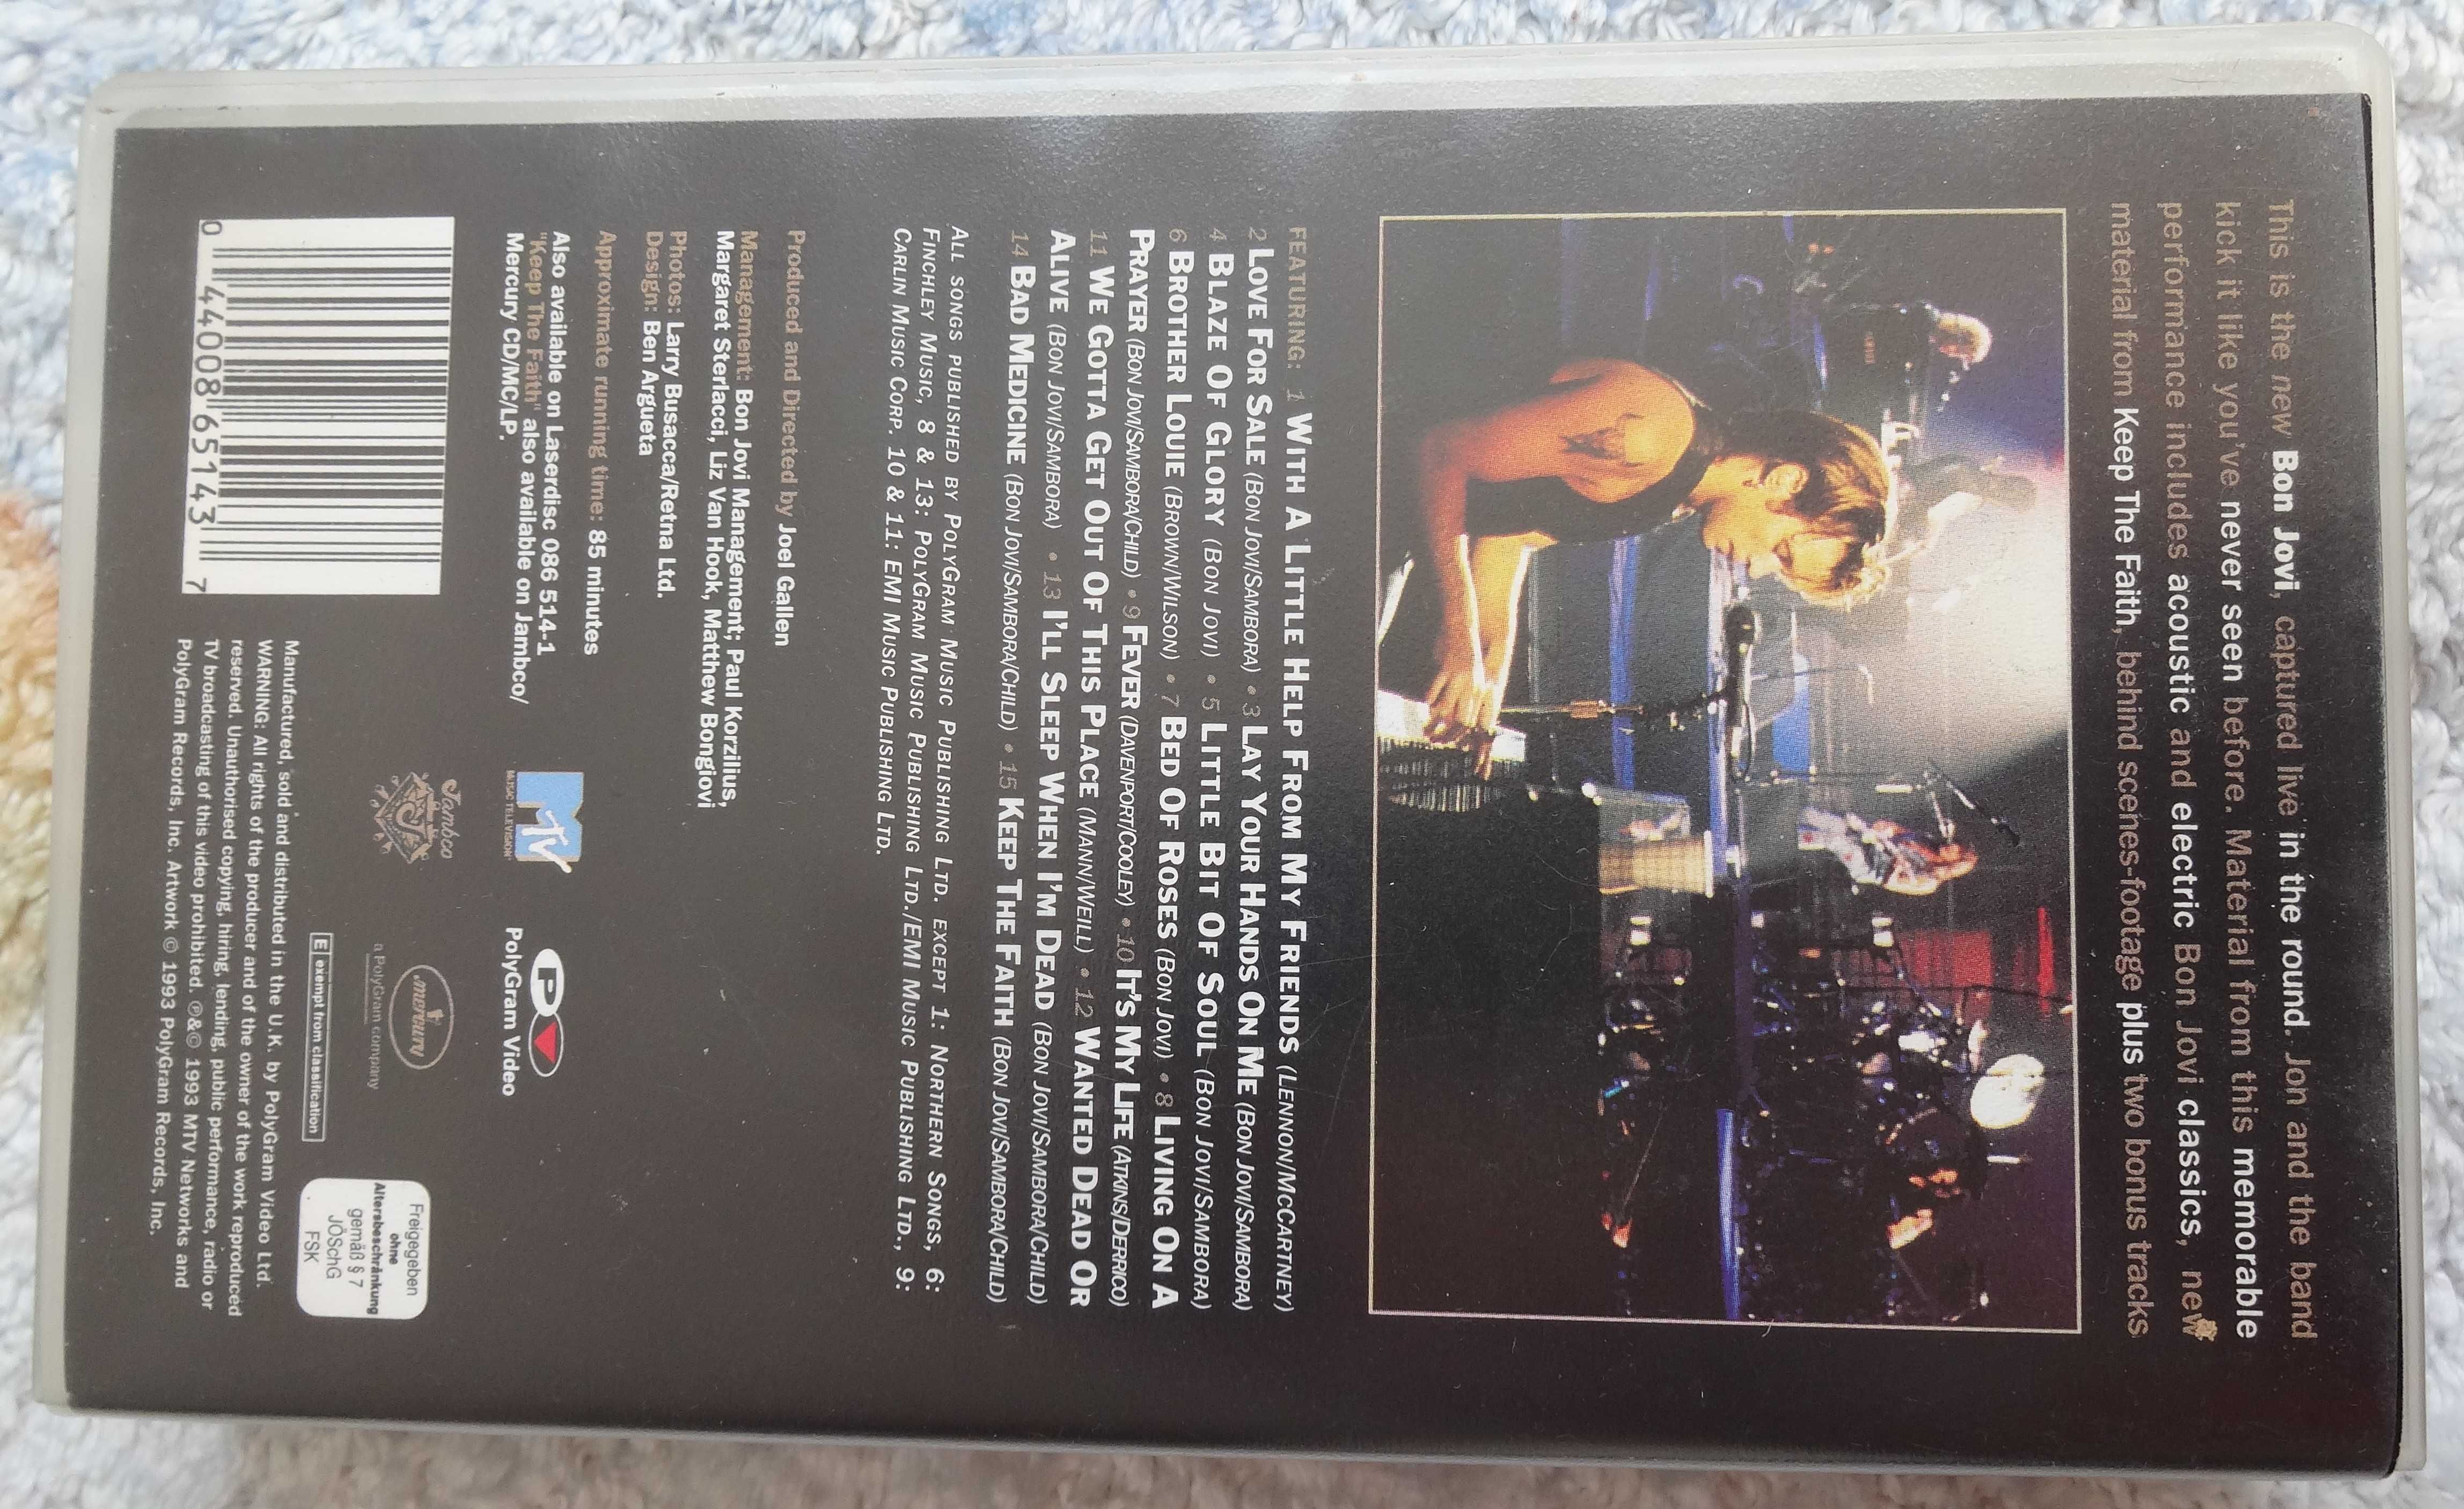 Bon Jovi "Keep the faith" - VHS Hi-Fi stereo z Wlk. Brt.(MTV PolyGram)